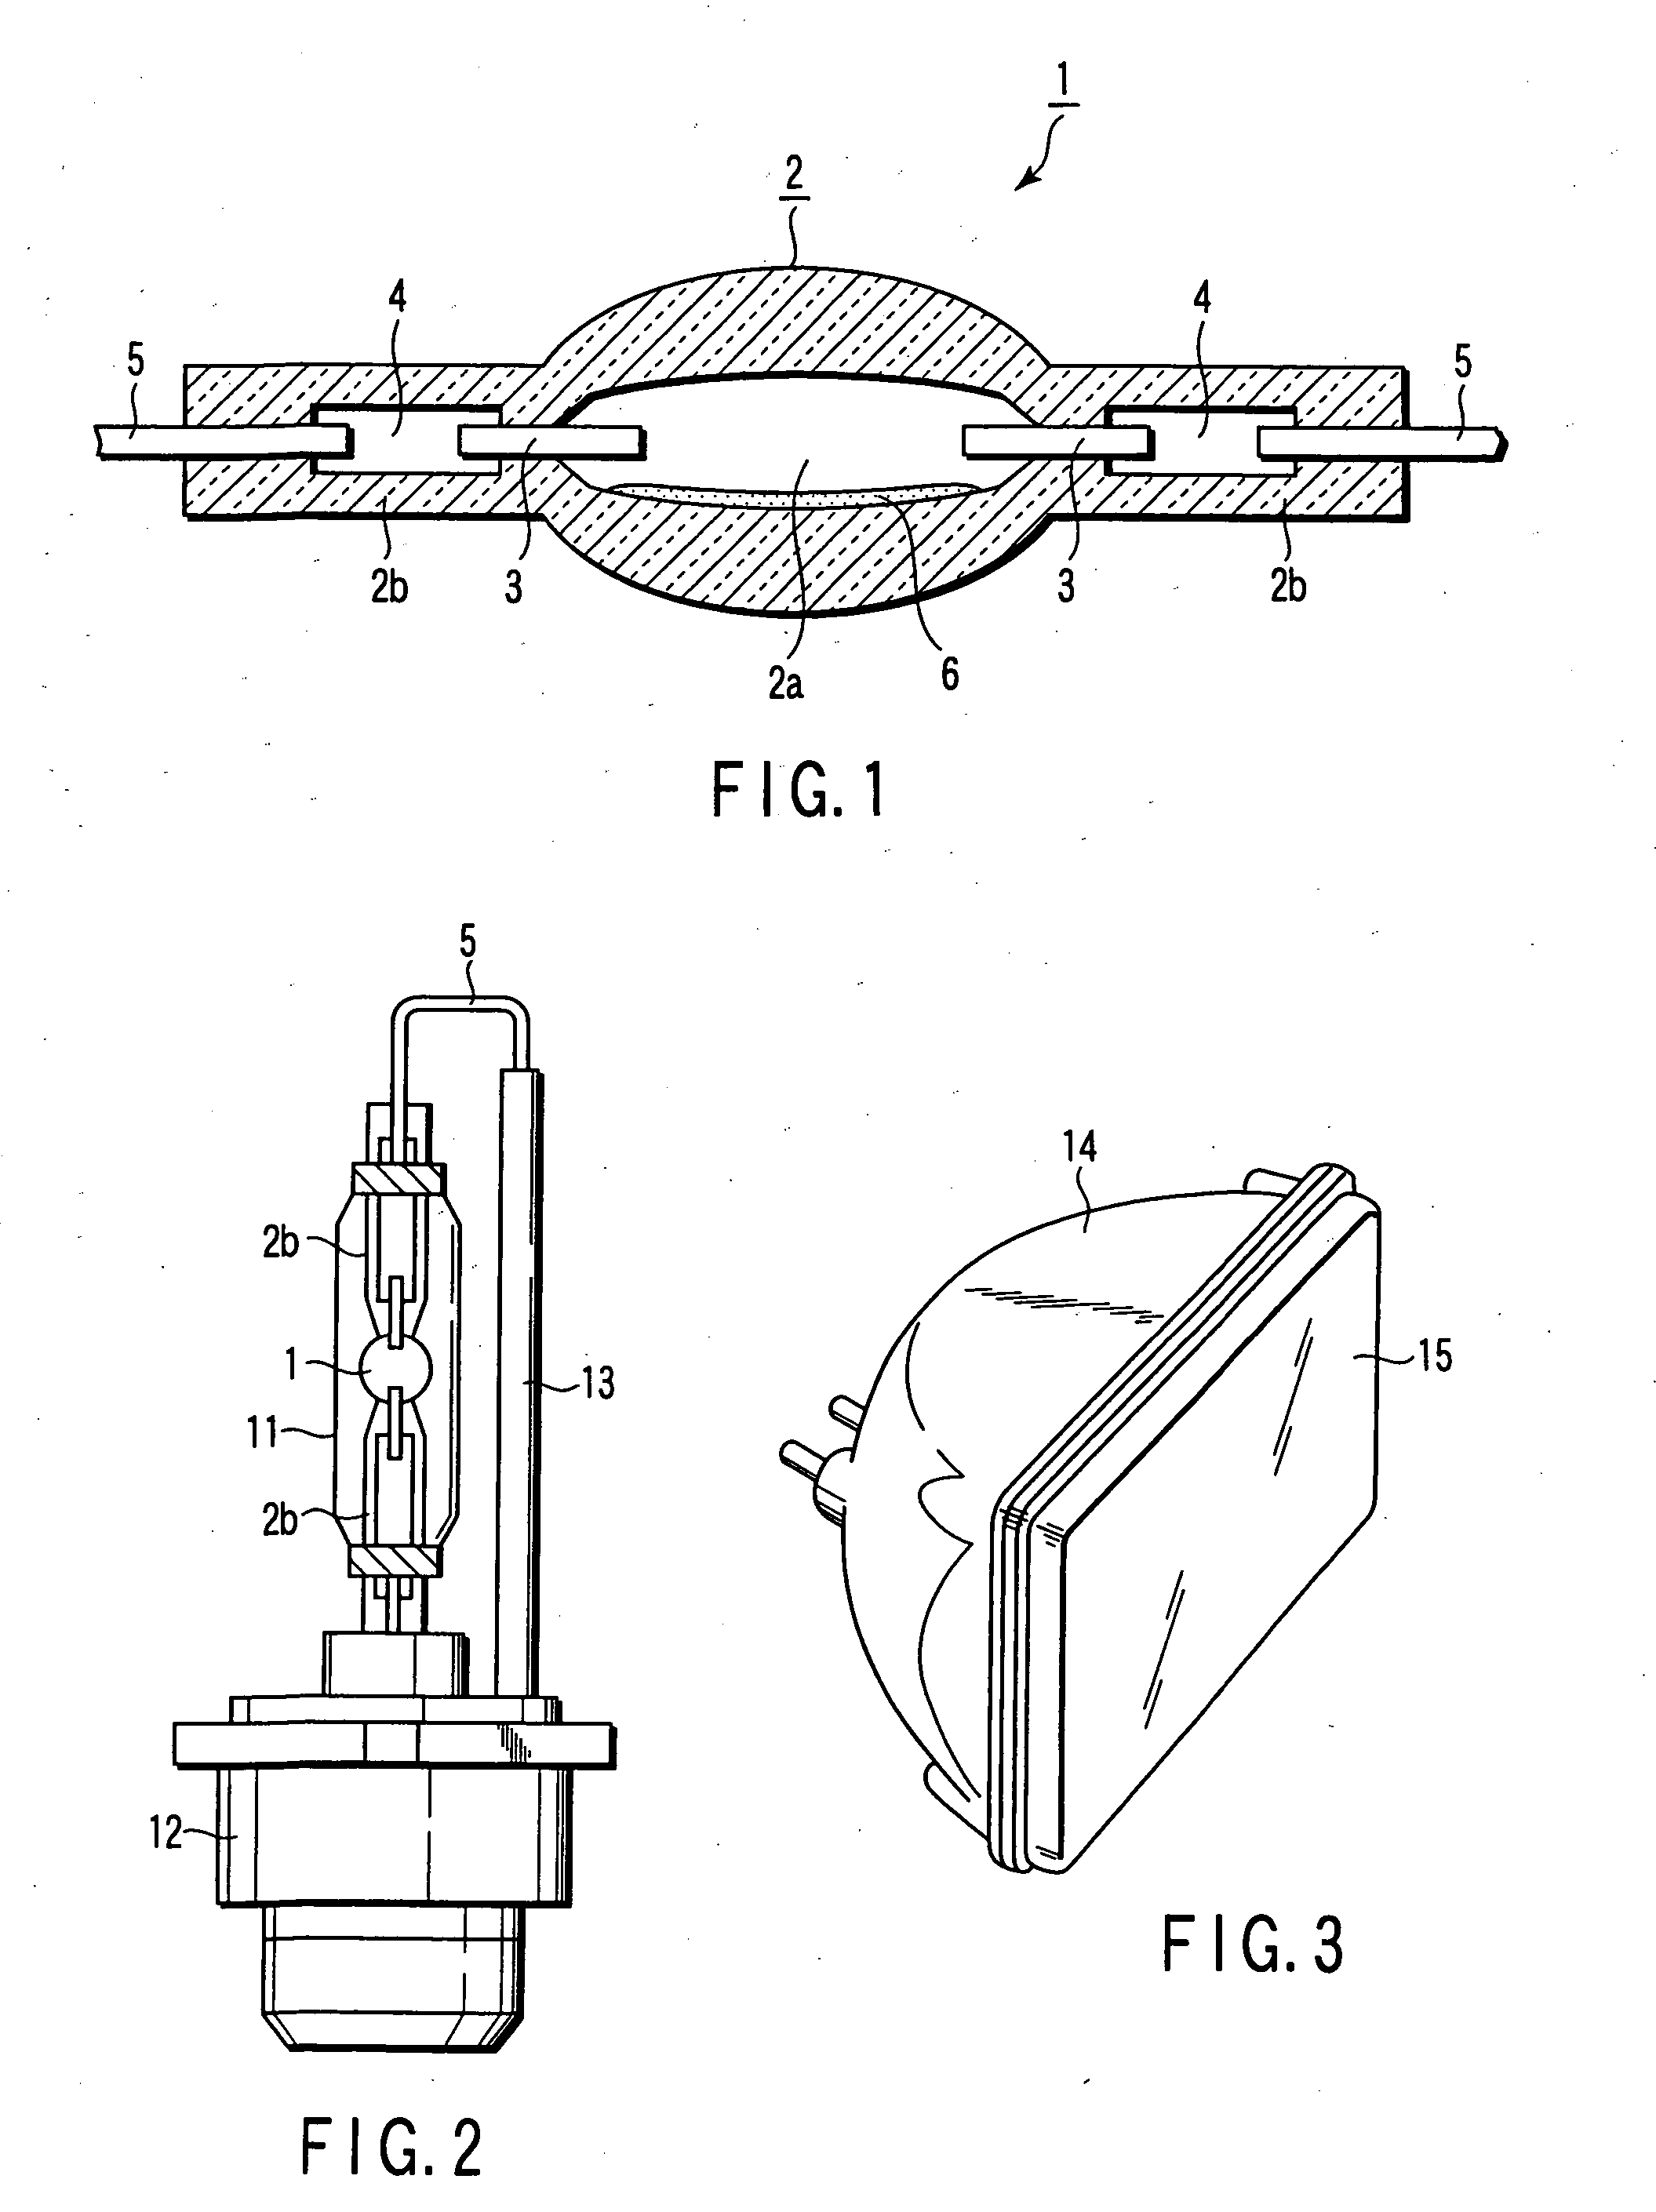 Metal halide lamp, headlight apparatus for vehicle using the same, and method of manufacturing metal halide lamp